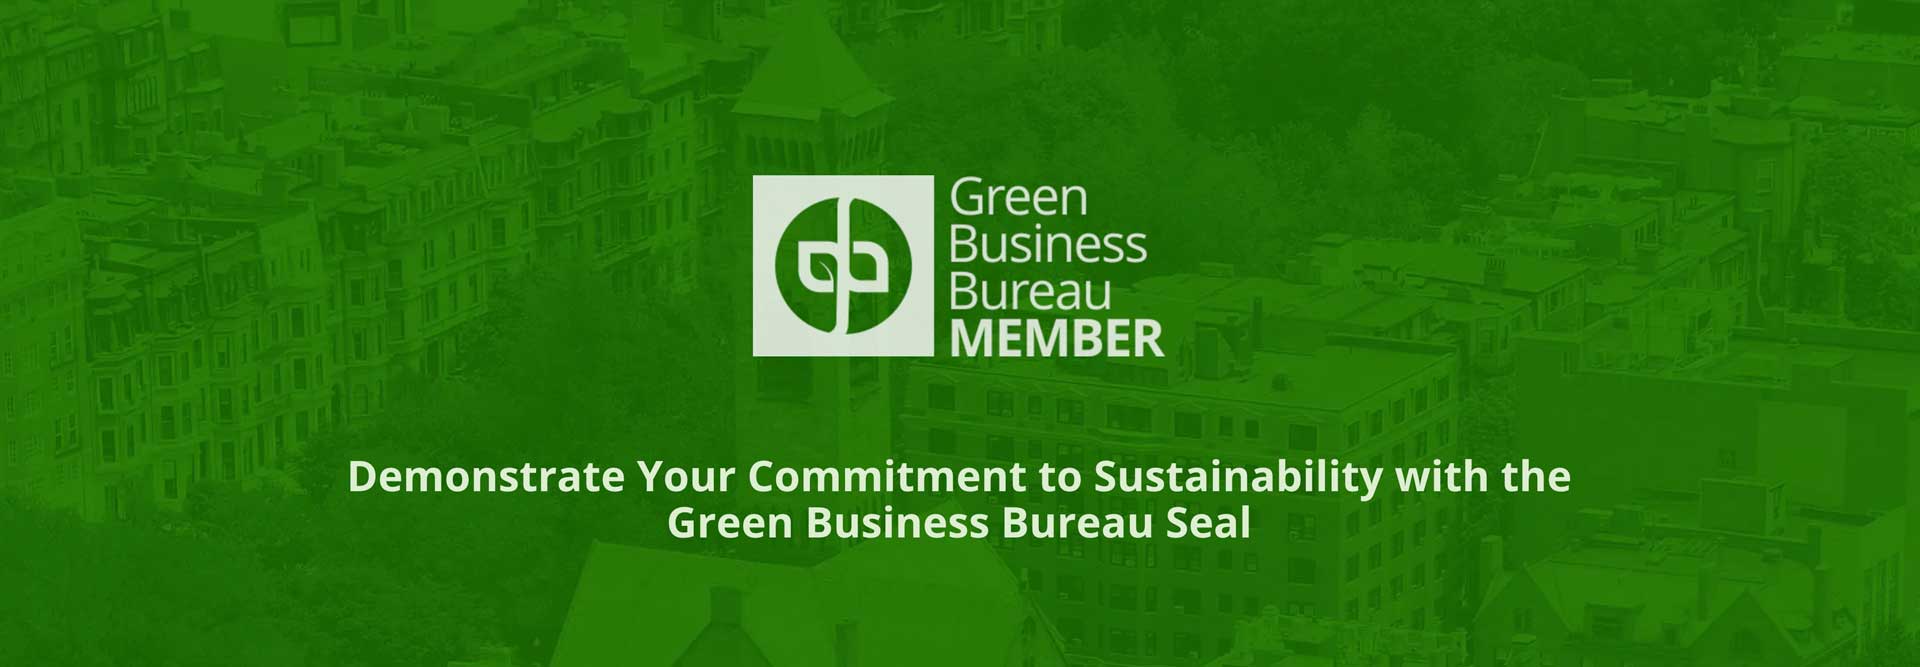 SYNLawn se junta ao Green Business Bureau